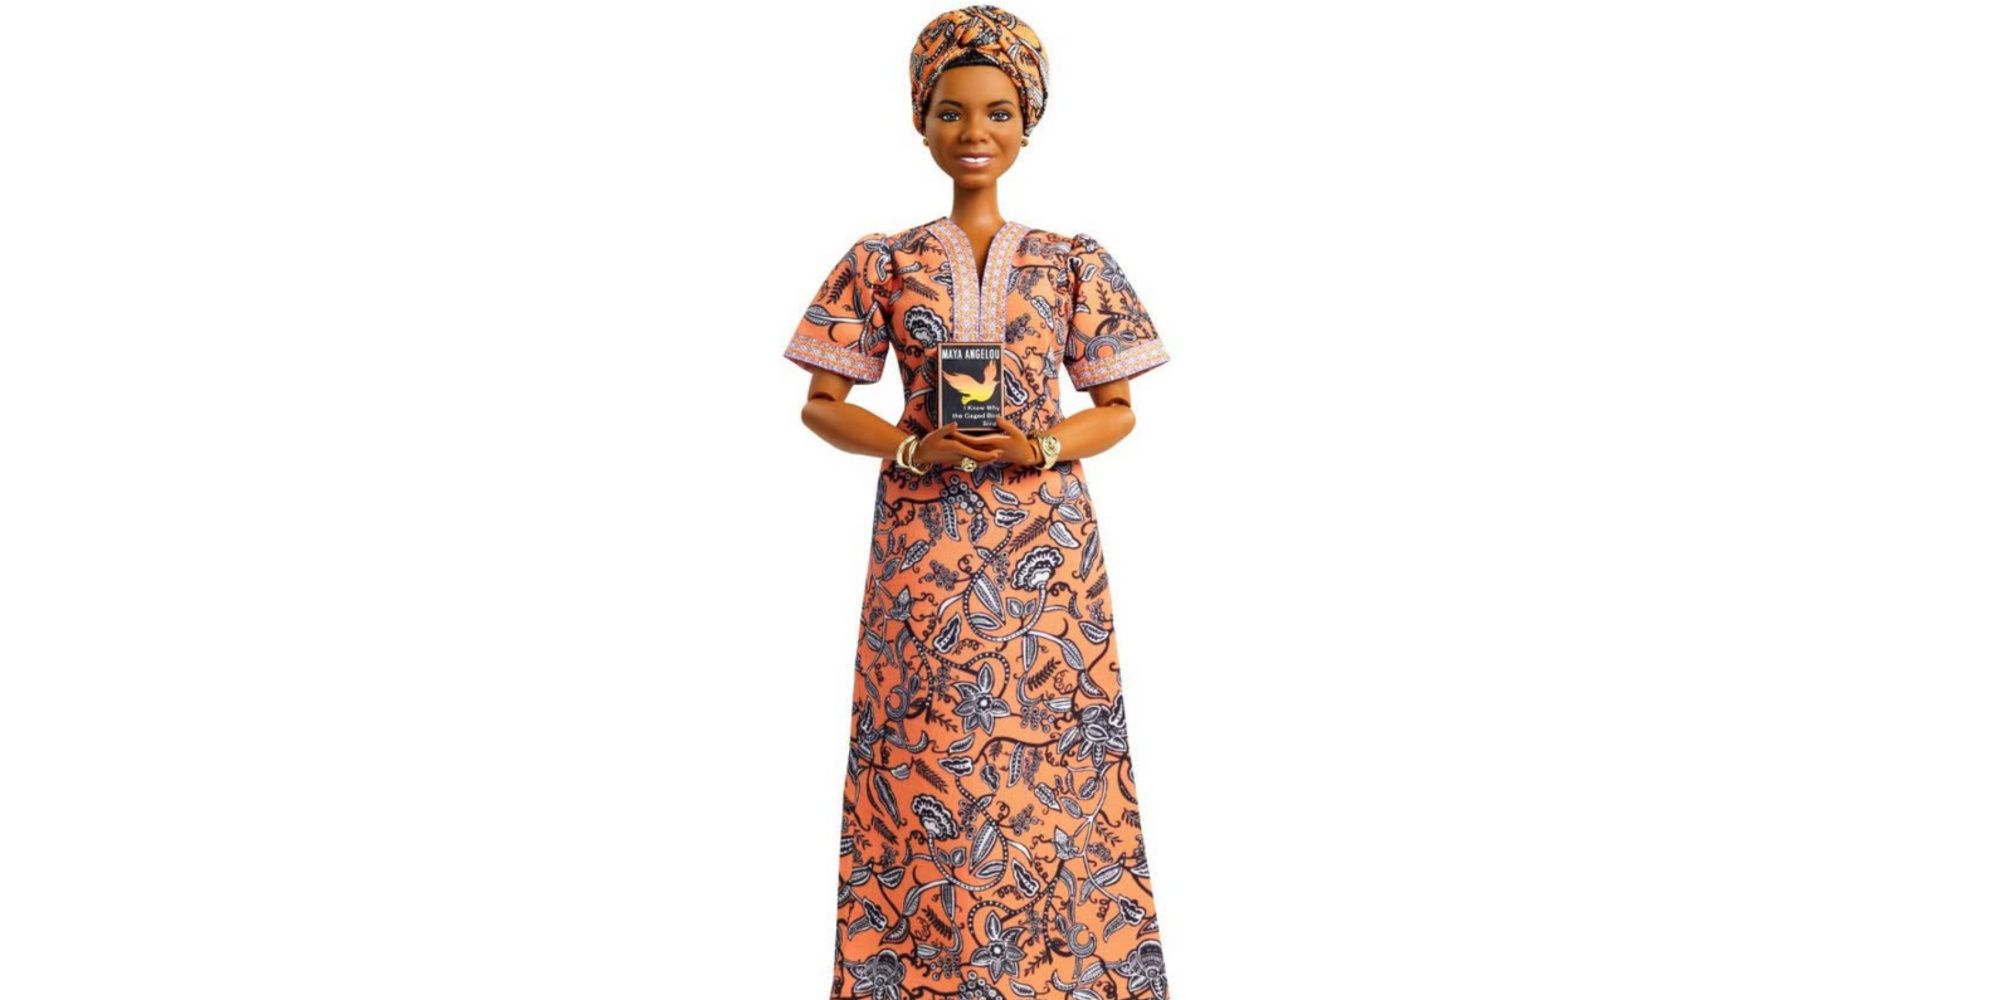 Barbie Inspiration Woman series Maya Angelou doll